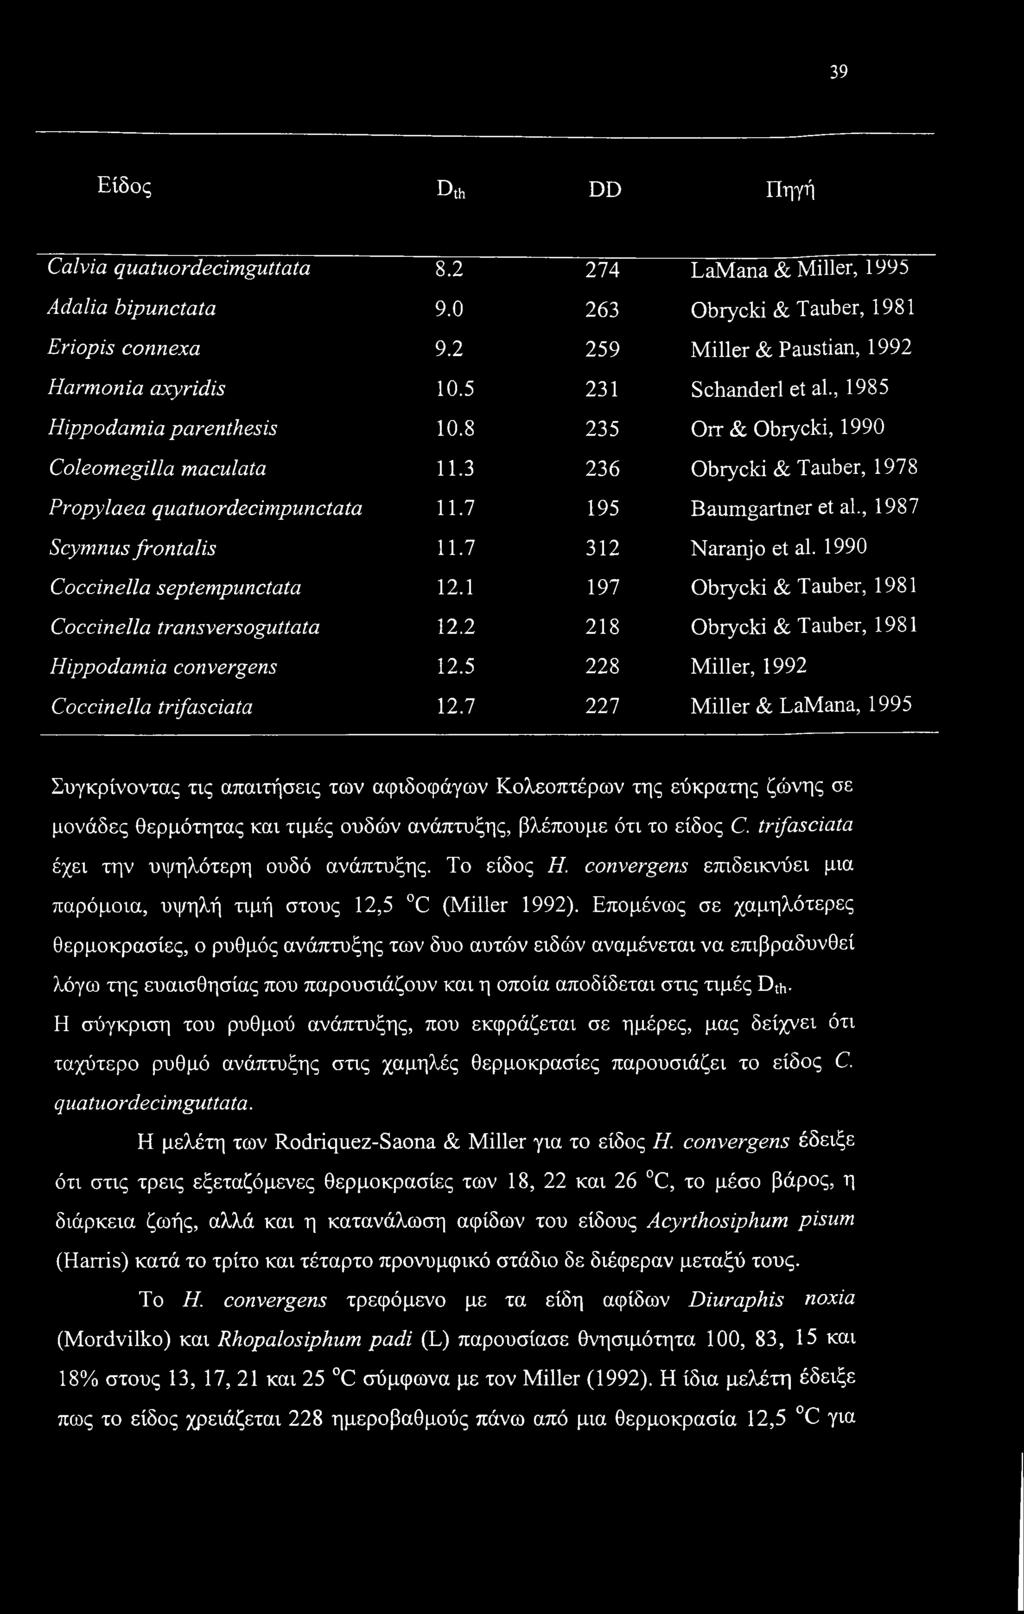 , 1987 Scymnus frontalis 11.7 312 Naranjo et al. 1990 Coccinella septempunctata 12.1 197 Obrycki & Tauber, 1981 Coccinella transversoguttata 12.2 218 Obrycki & Tauber, 1981 Hippodamia convergens 12.